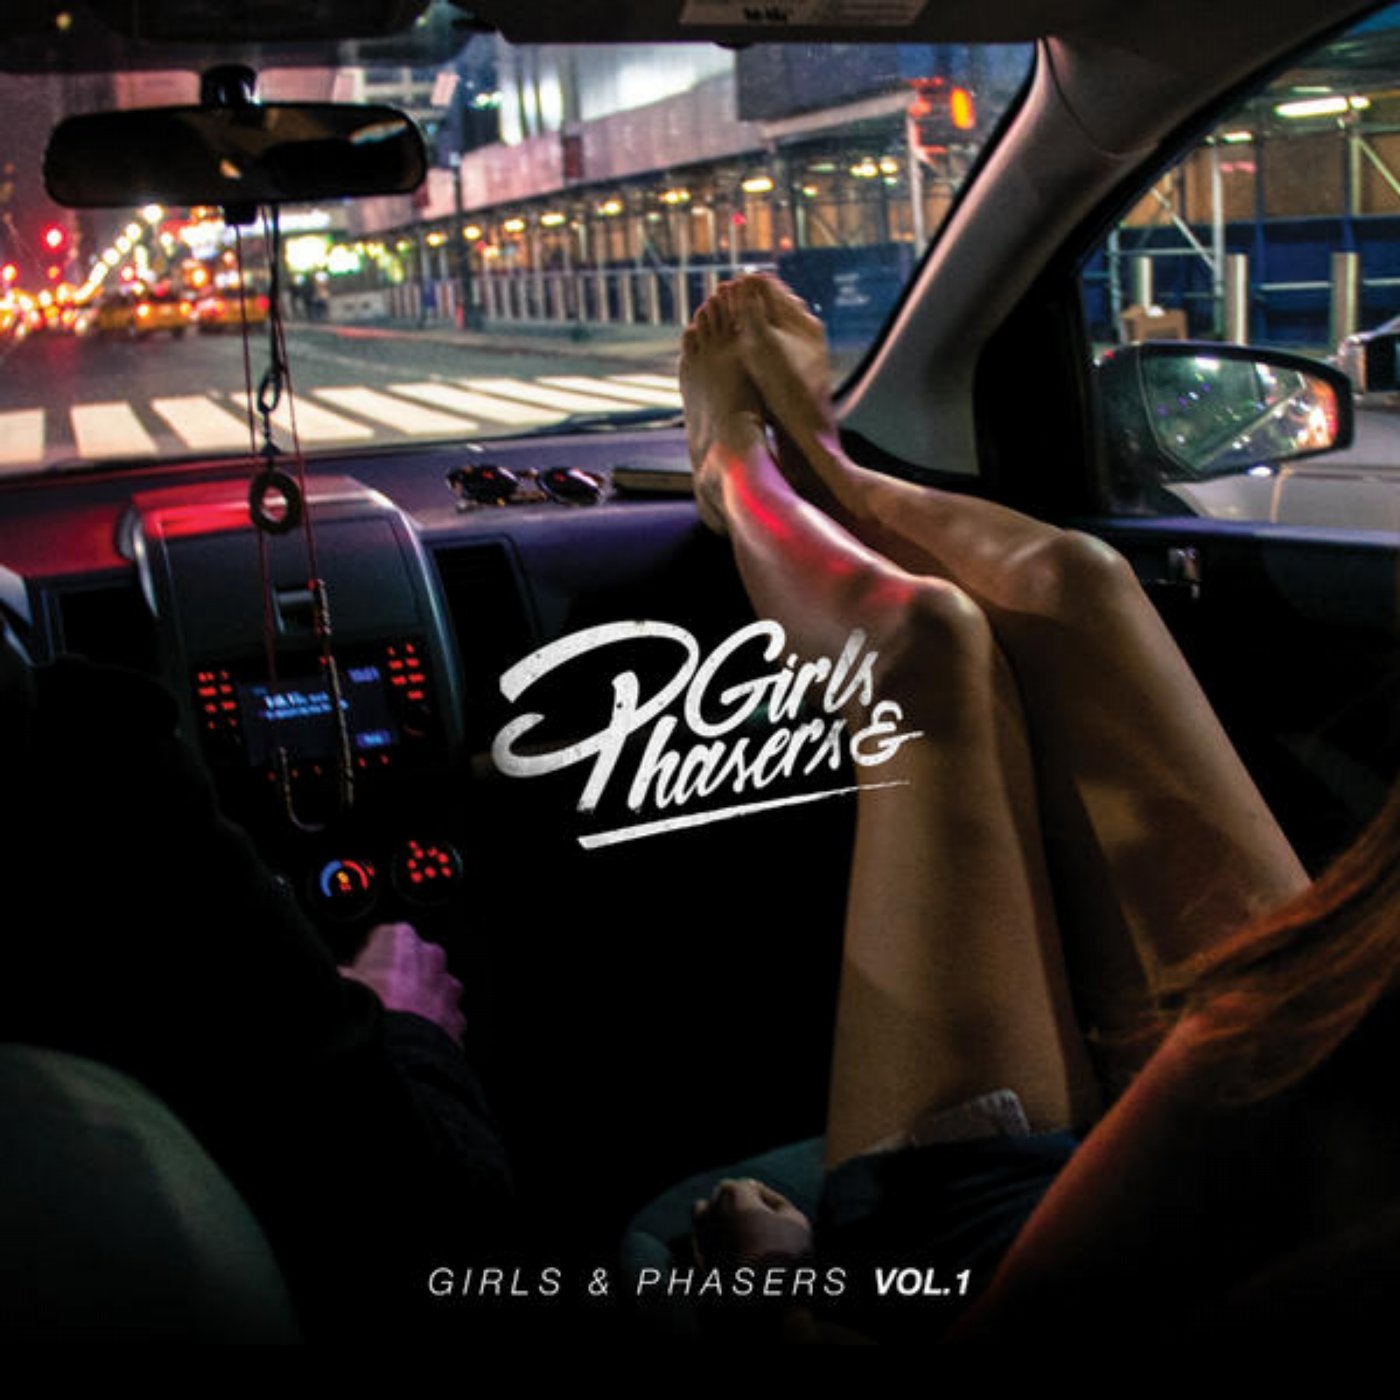 Girls & Phasers Vol. 1